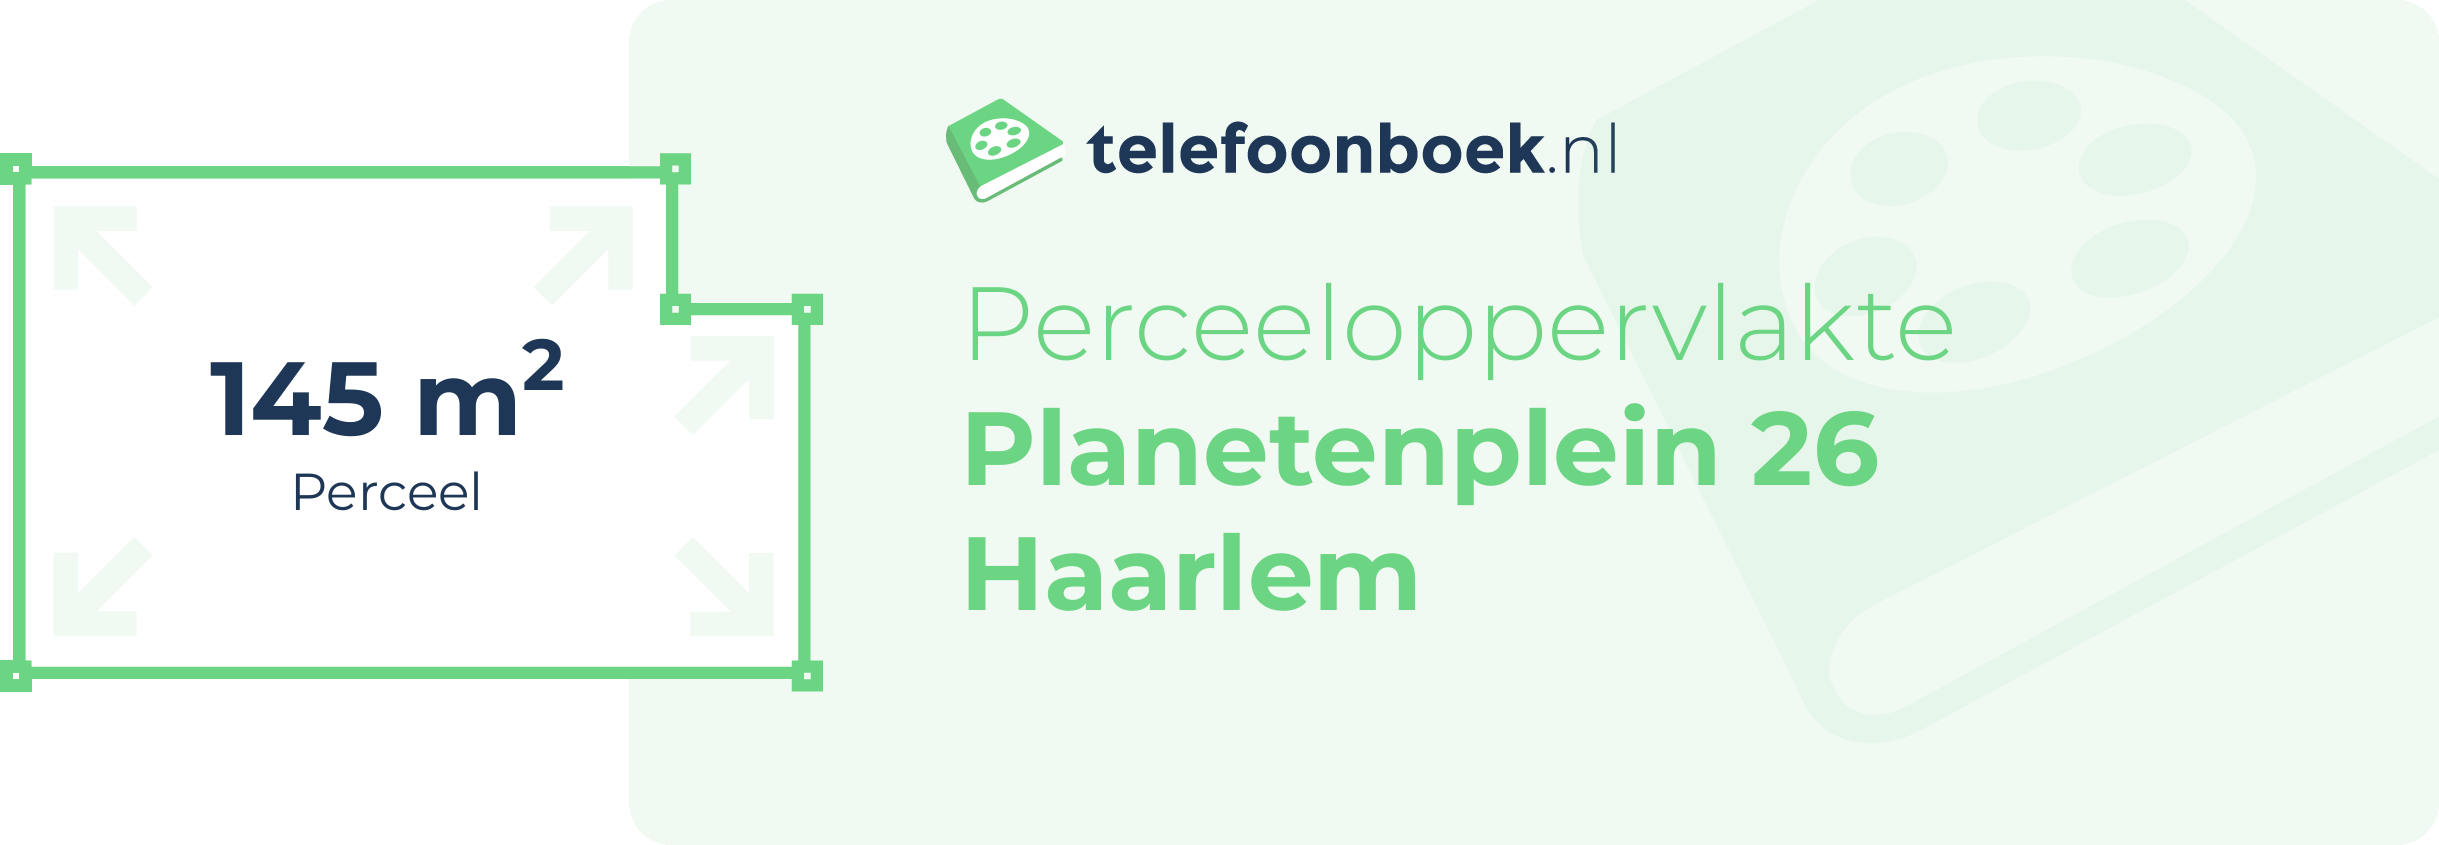 Perceeloppervlakte Planetenplein 26 Haarlem